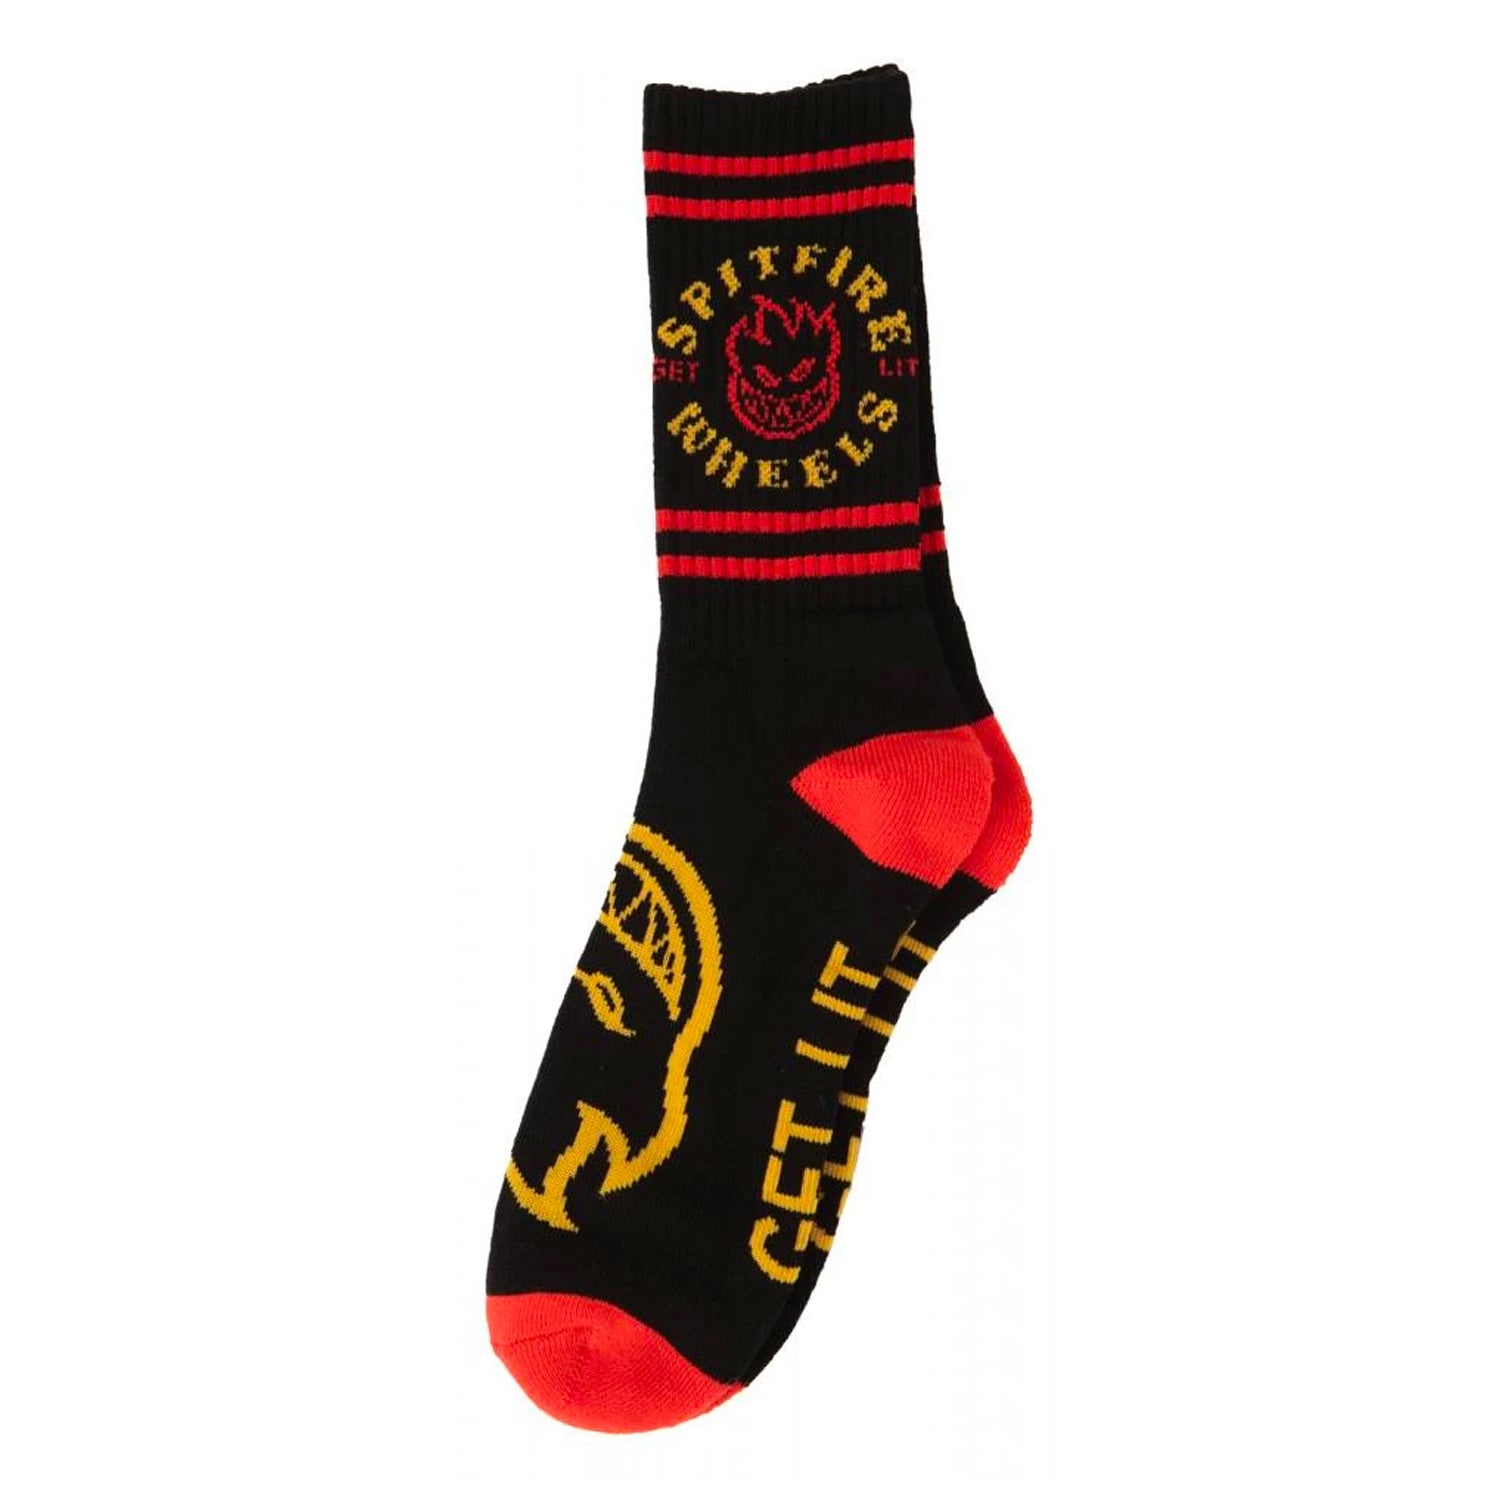 Spitfire Socks Classic Bighead - Black / Red / Gold - Prime Delux Store